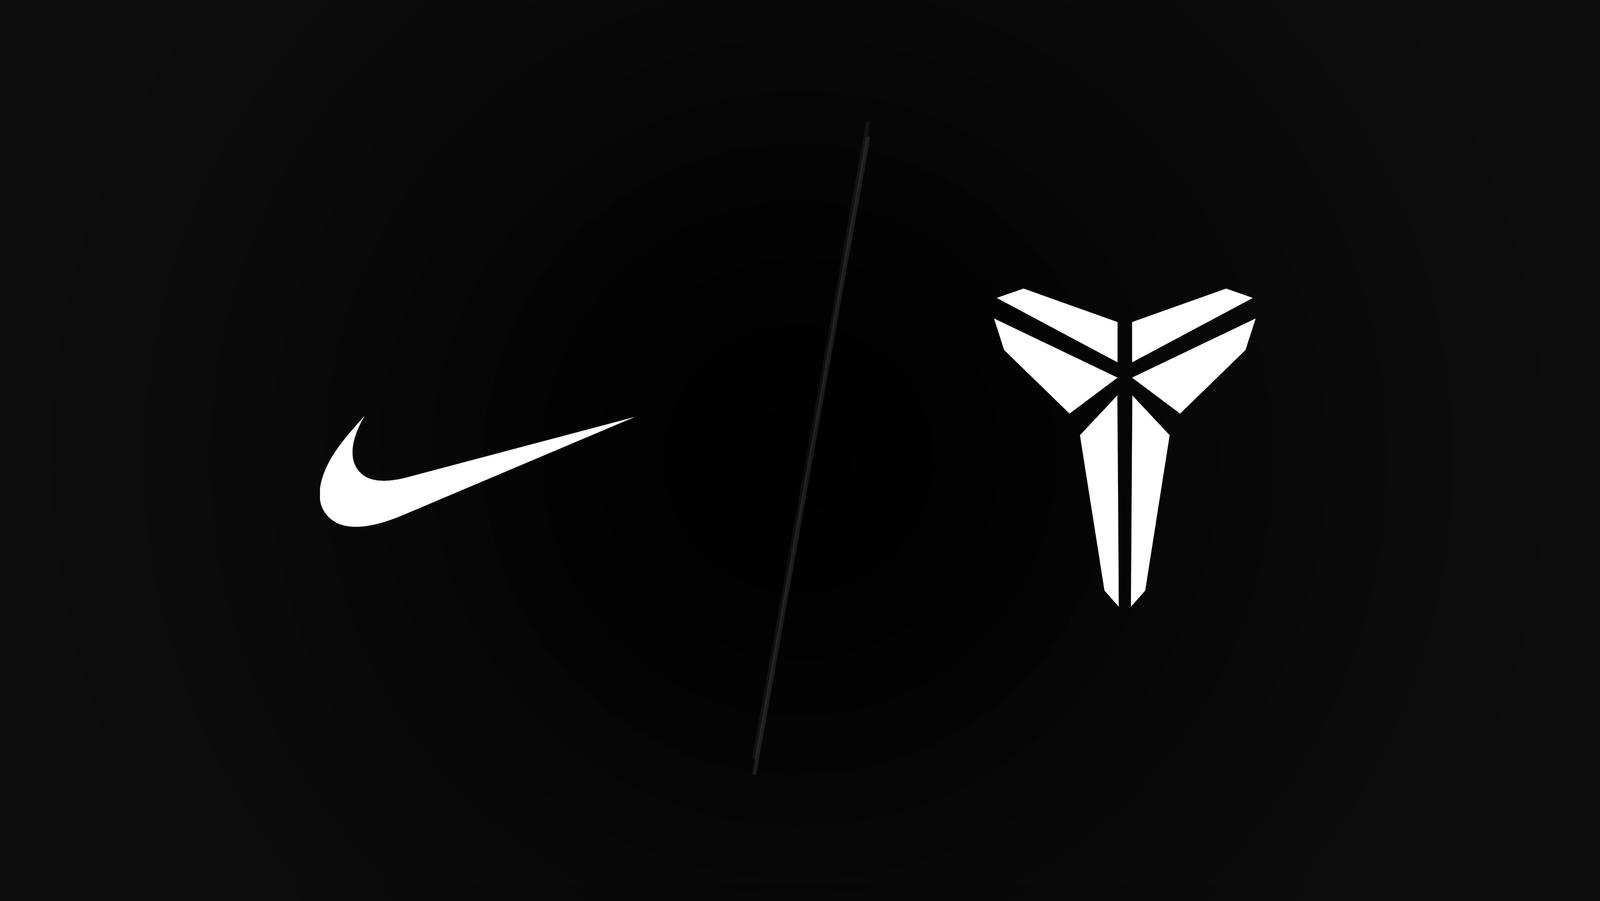 Nike to launch ‘Mamba Week’ to honor late basketball legend Kobe Bryant